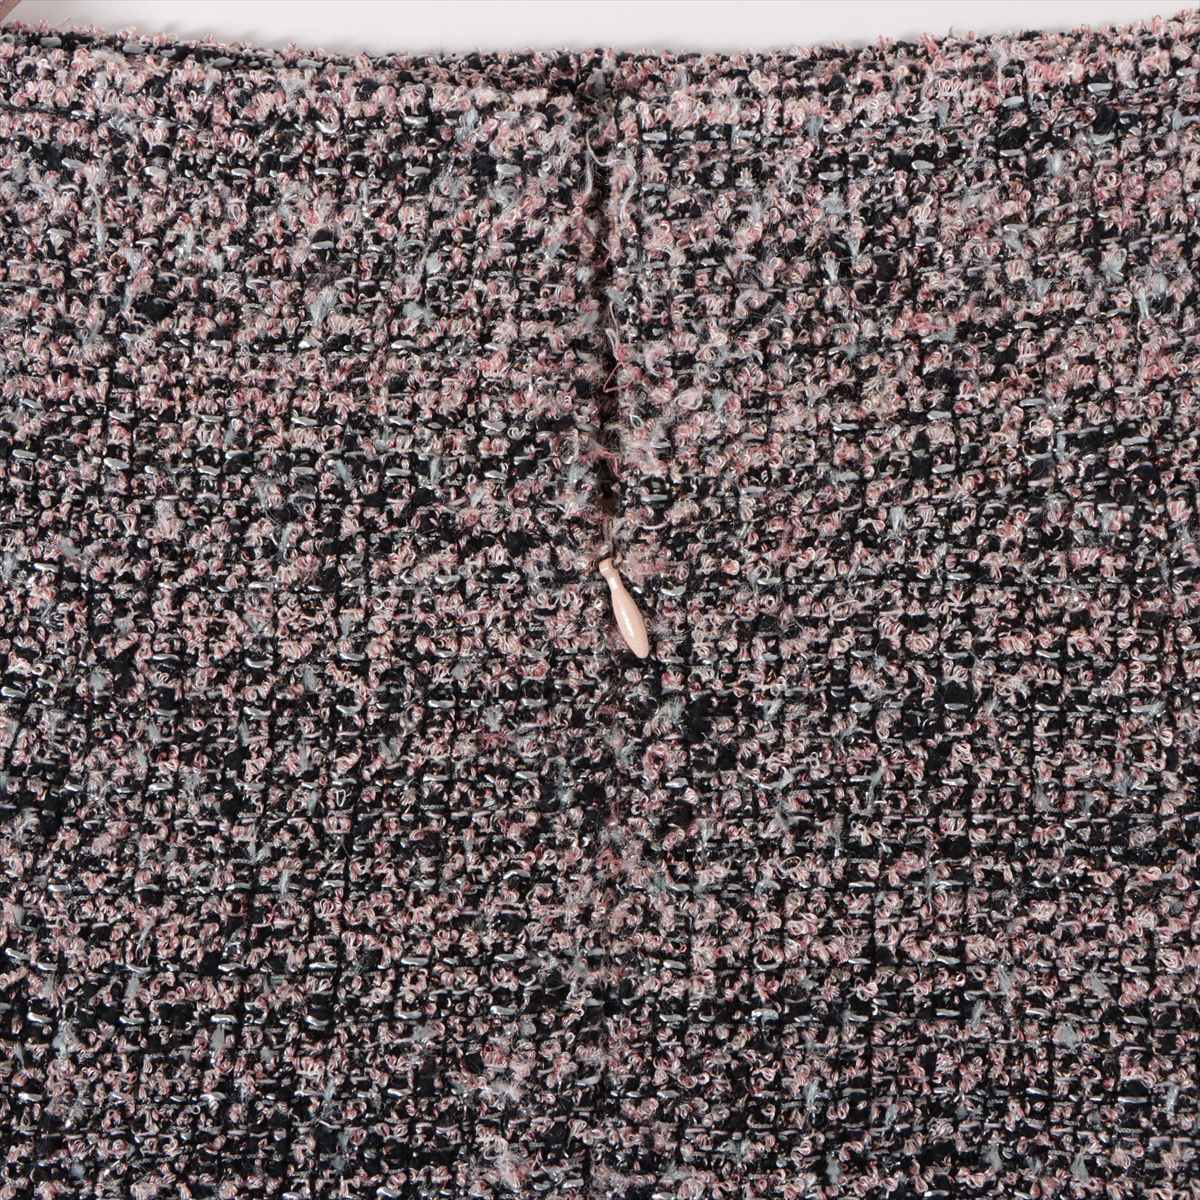 Chanel Coco P46 Wool   × Cotton Shirt 38  Pink × Black × White P46624V34628